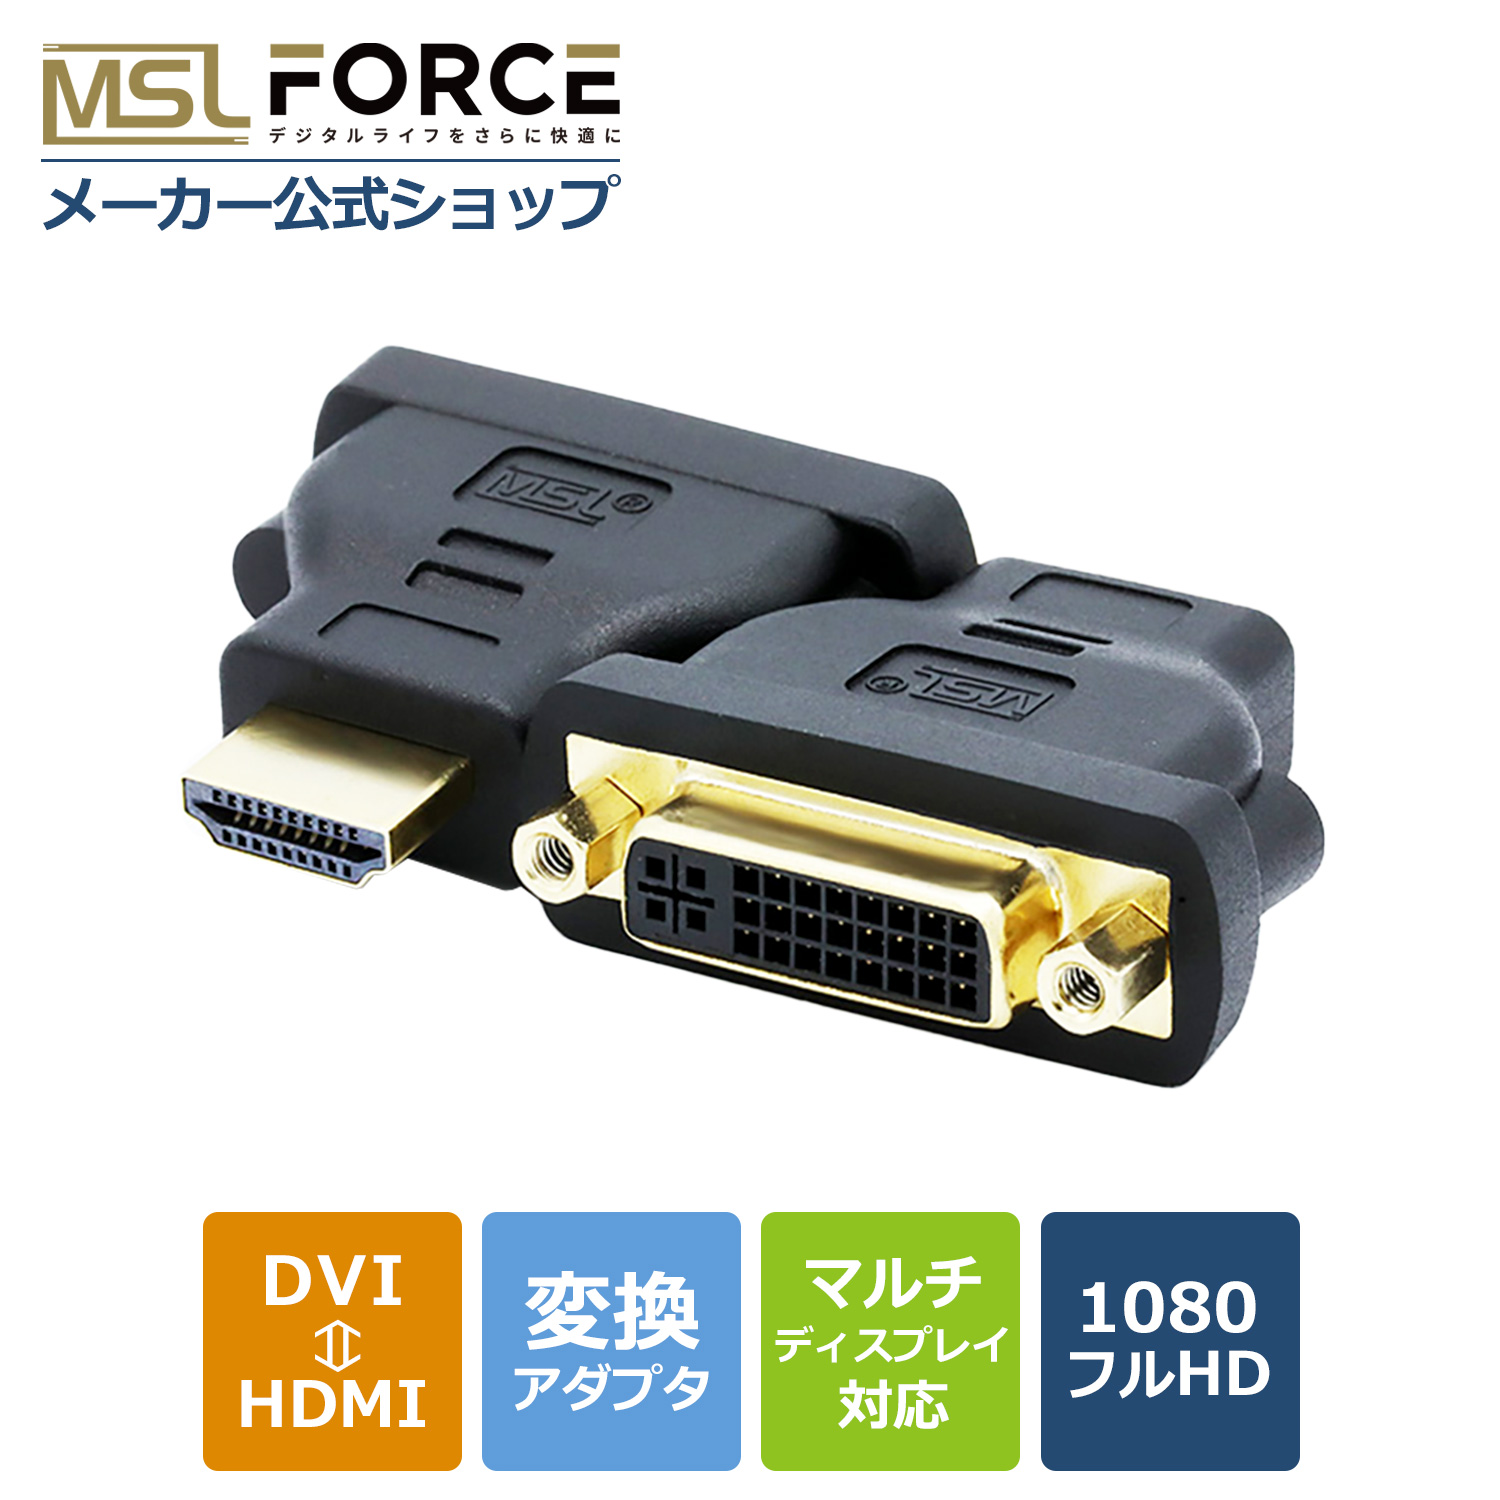 (DVI 24 1 ) or ( DVI 24 5) 選択可 HDMI L字型 変換アダプタ 90°-270°(DVIオス・標準HDMIメス)角度自由調整変換アダプタ